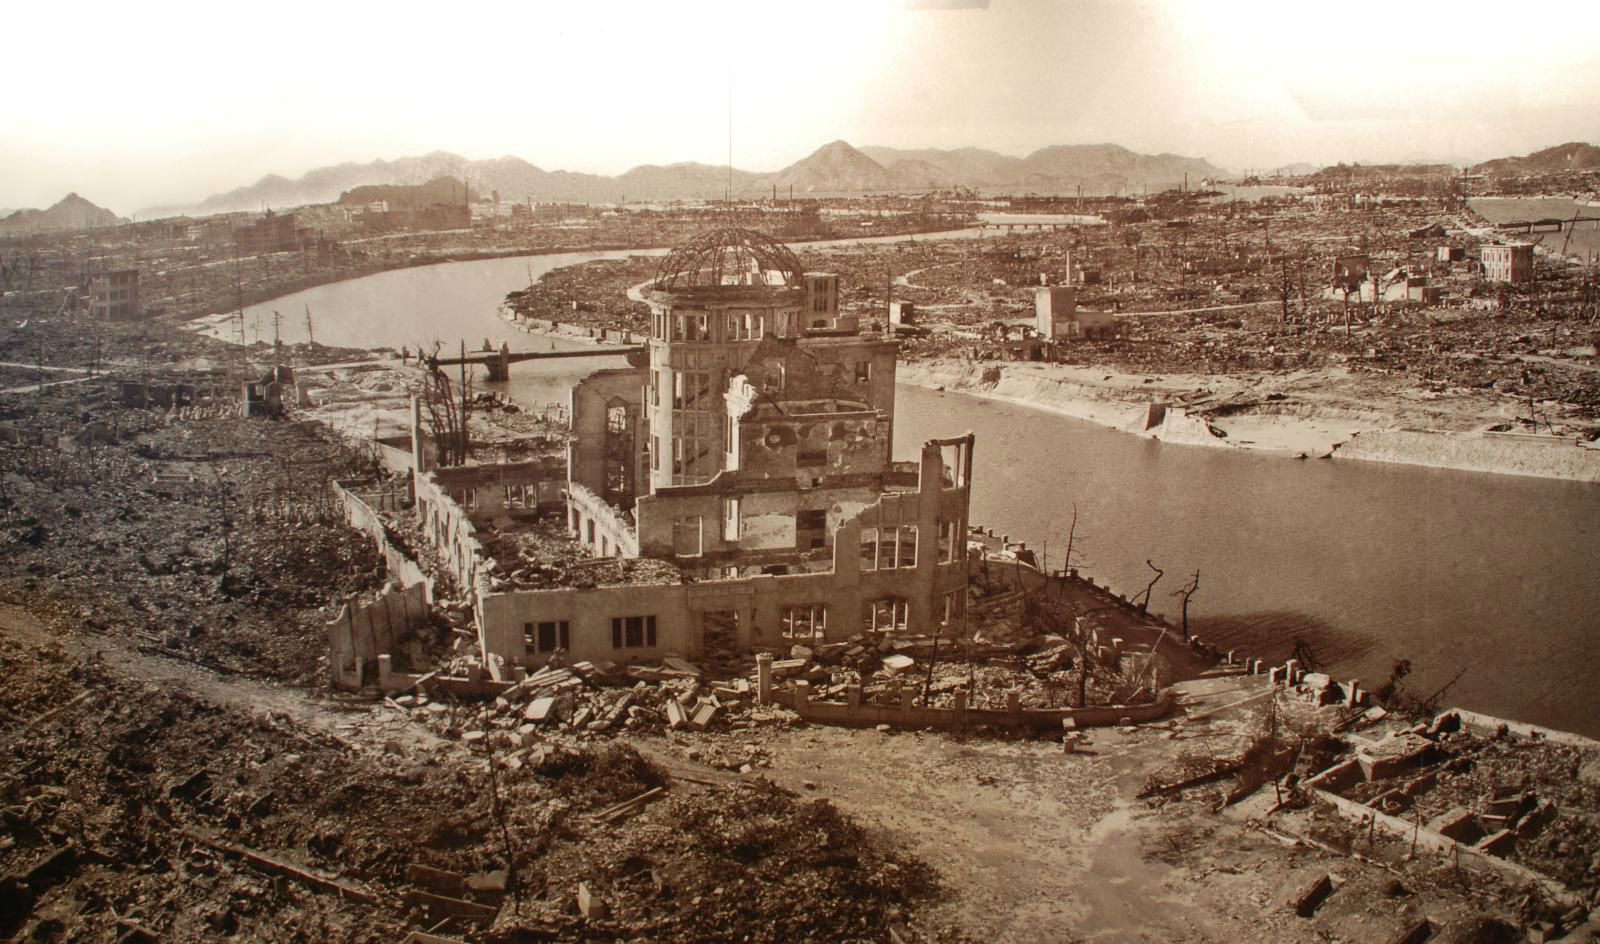 Les bombardements de Nagasaki et Hiroshima ont fait plus de 150'000 morts. (Photo: Flickr/xiquinhosilva/CC BY 2.0)